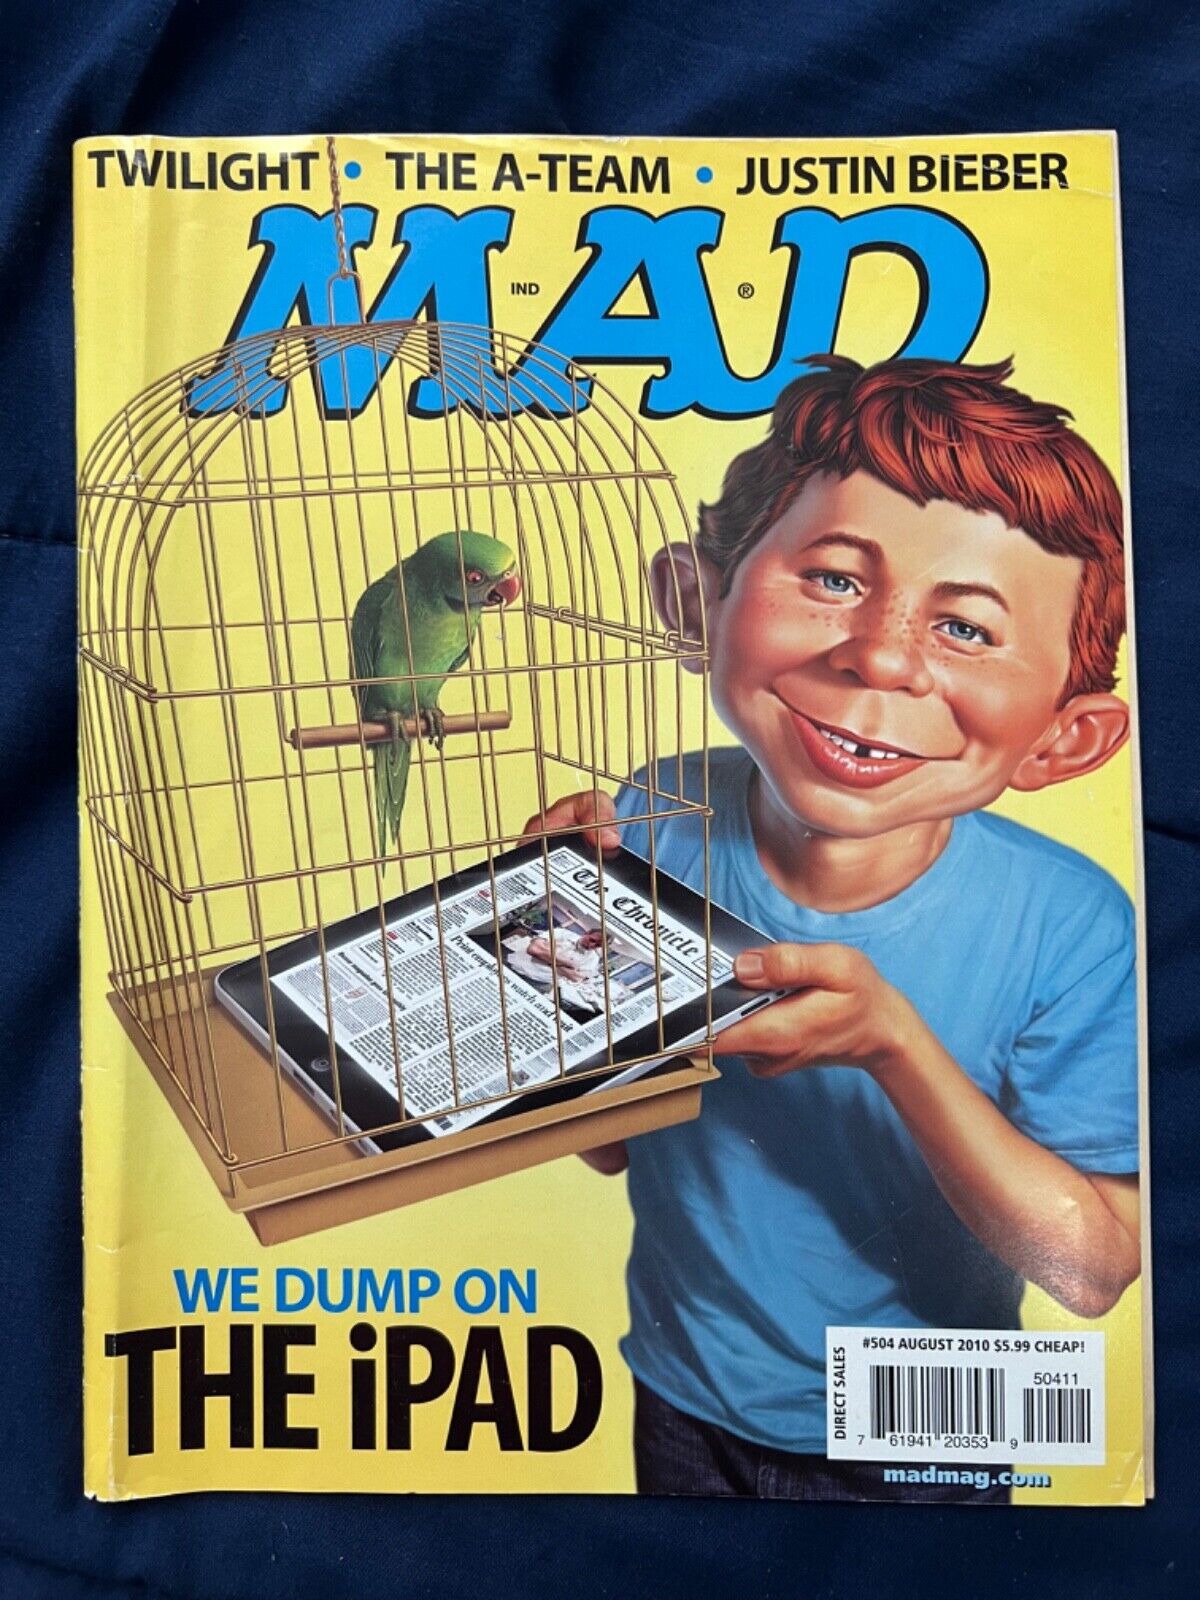 Mad Magazine #504 Aug 2010 I-Pad, Twilight, Justin Bieber 